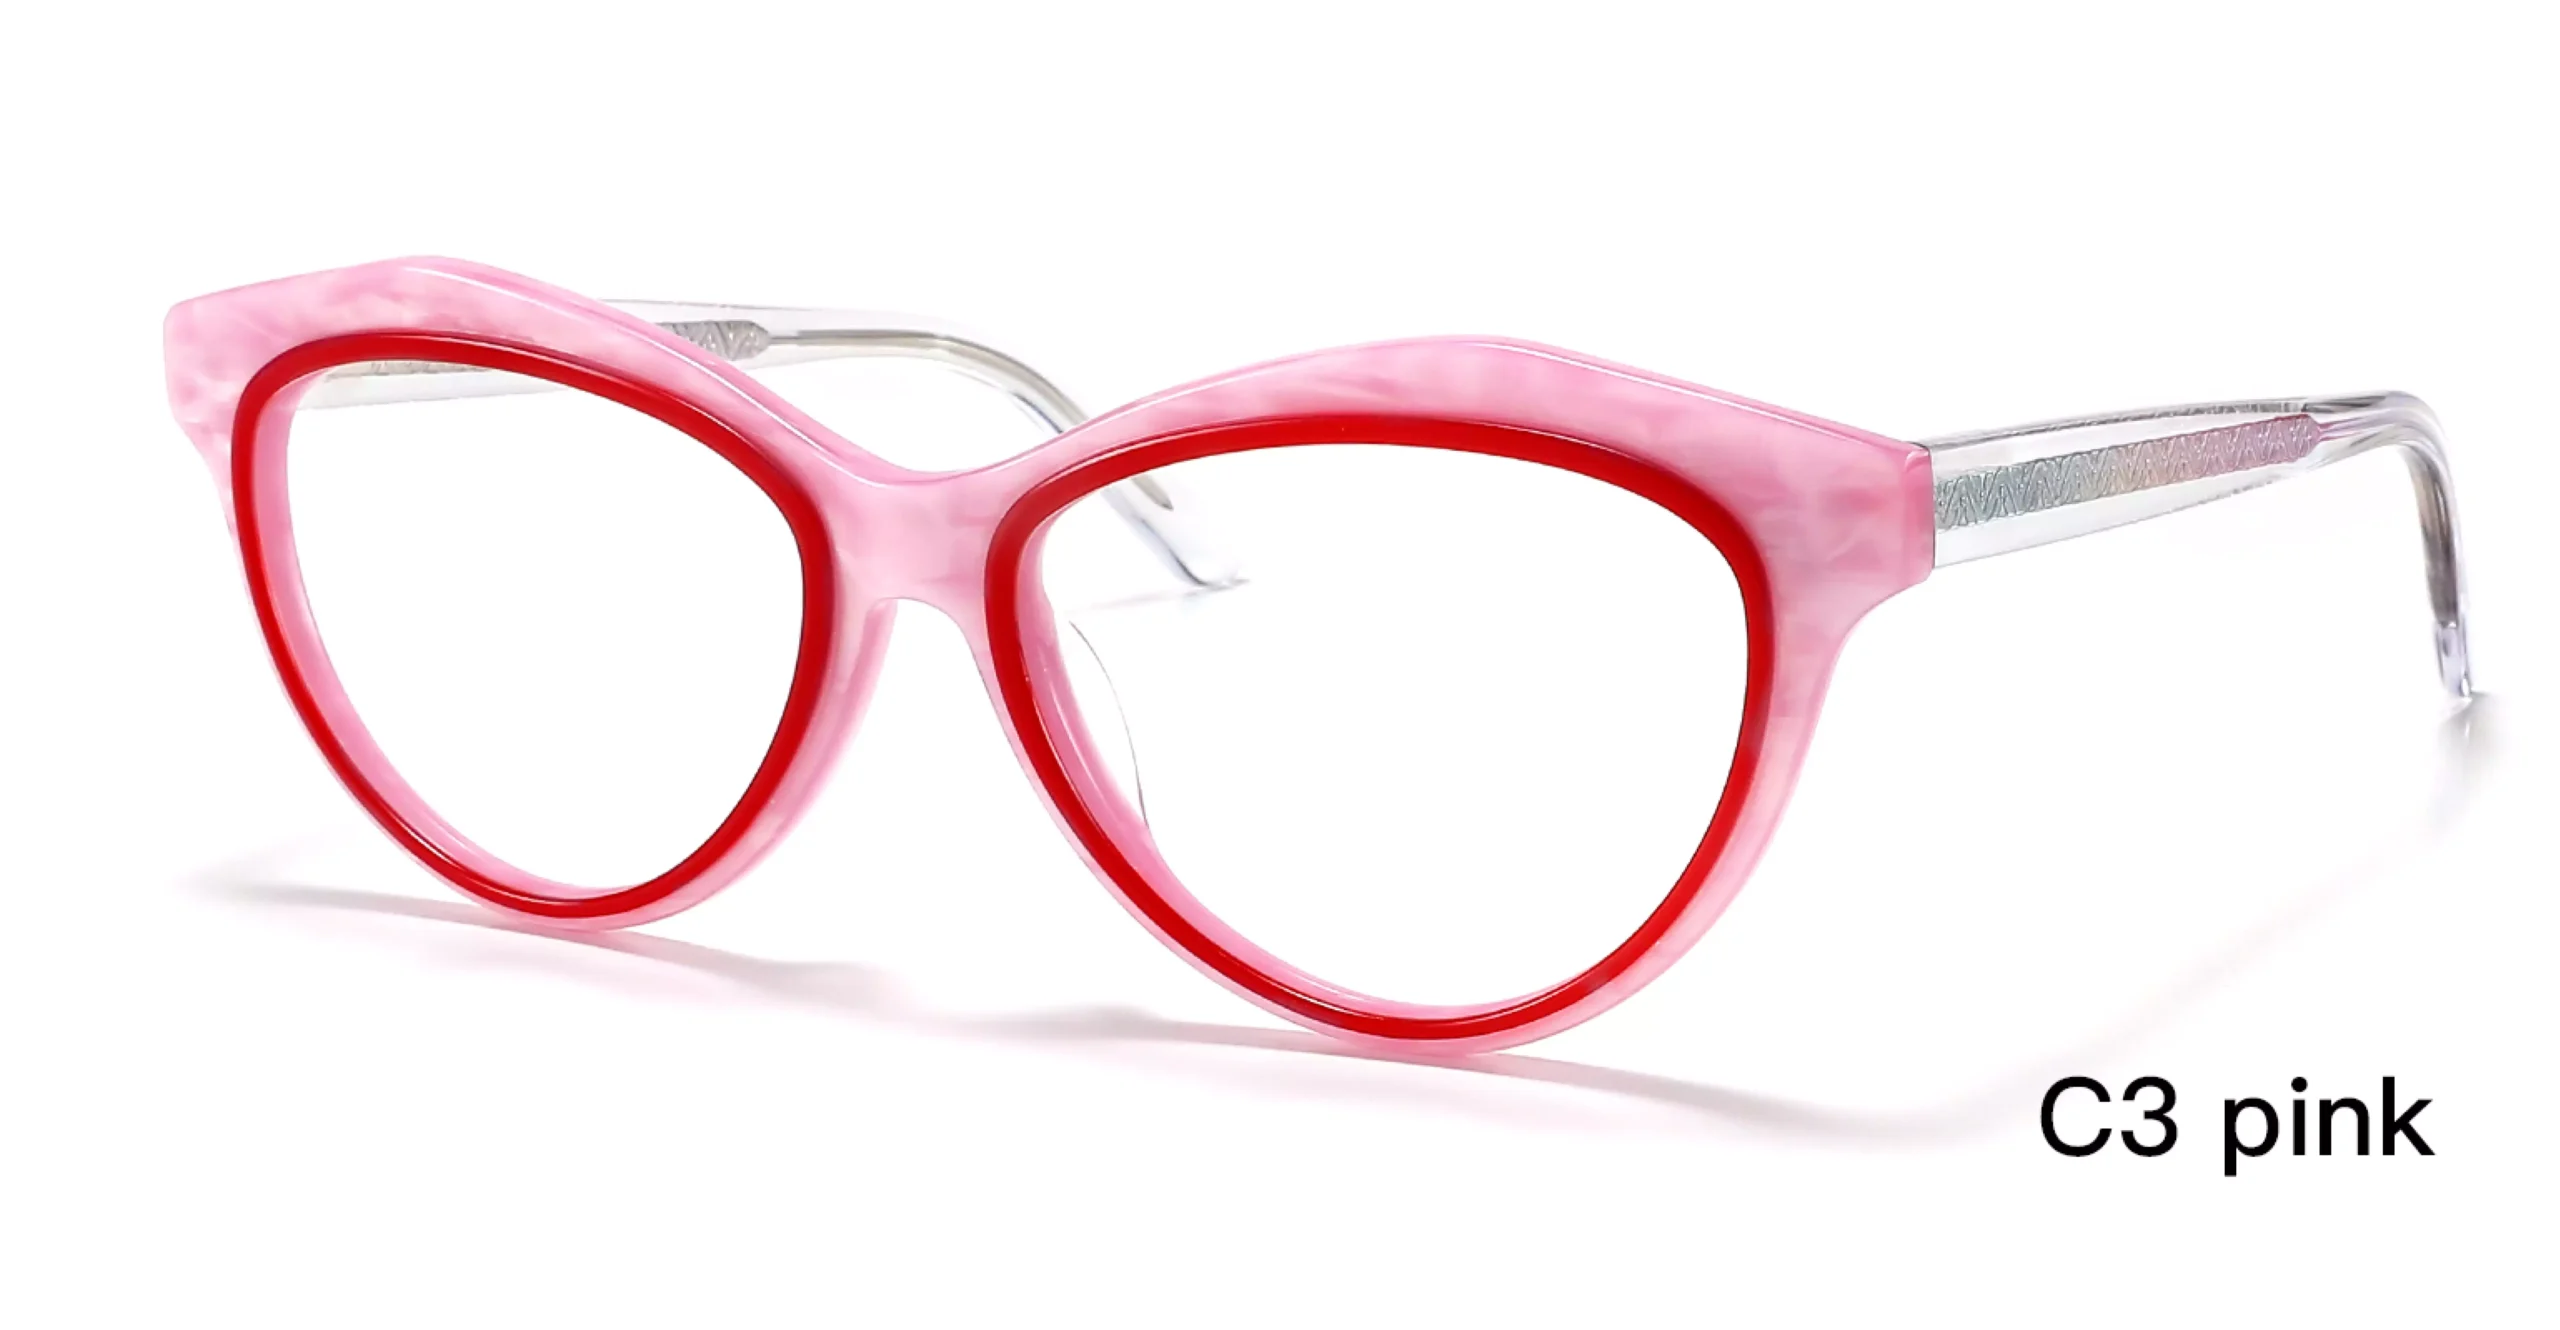 Wholesale, Cat Eye Frames, For Prescription Glasses, Pink, Gradient Temple, 45 Degree Display